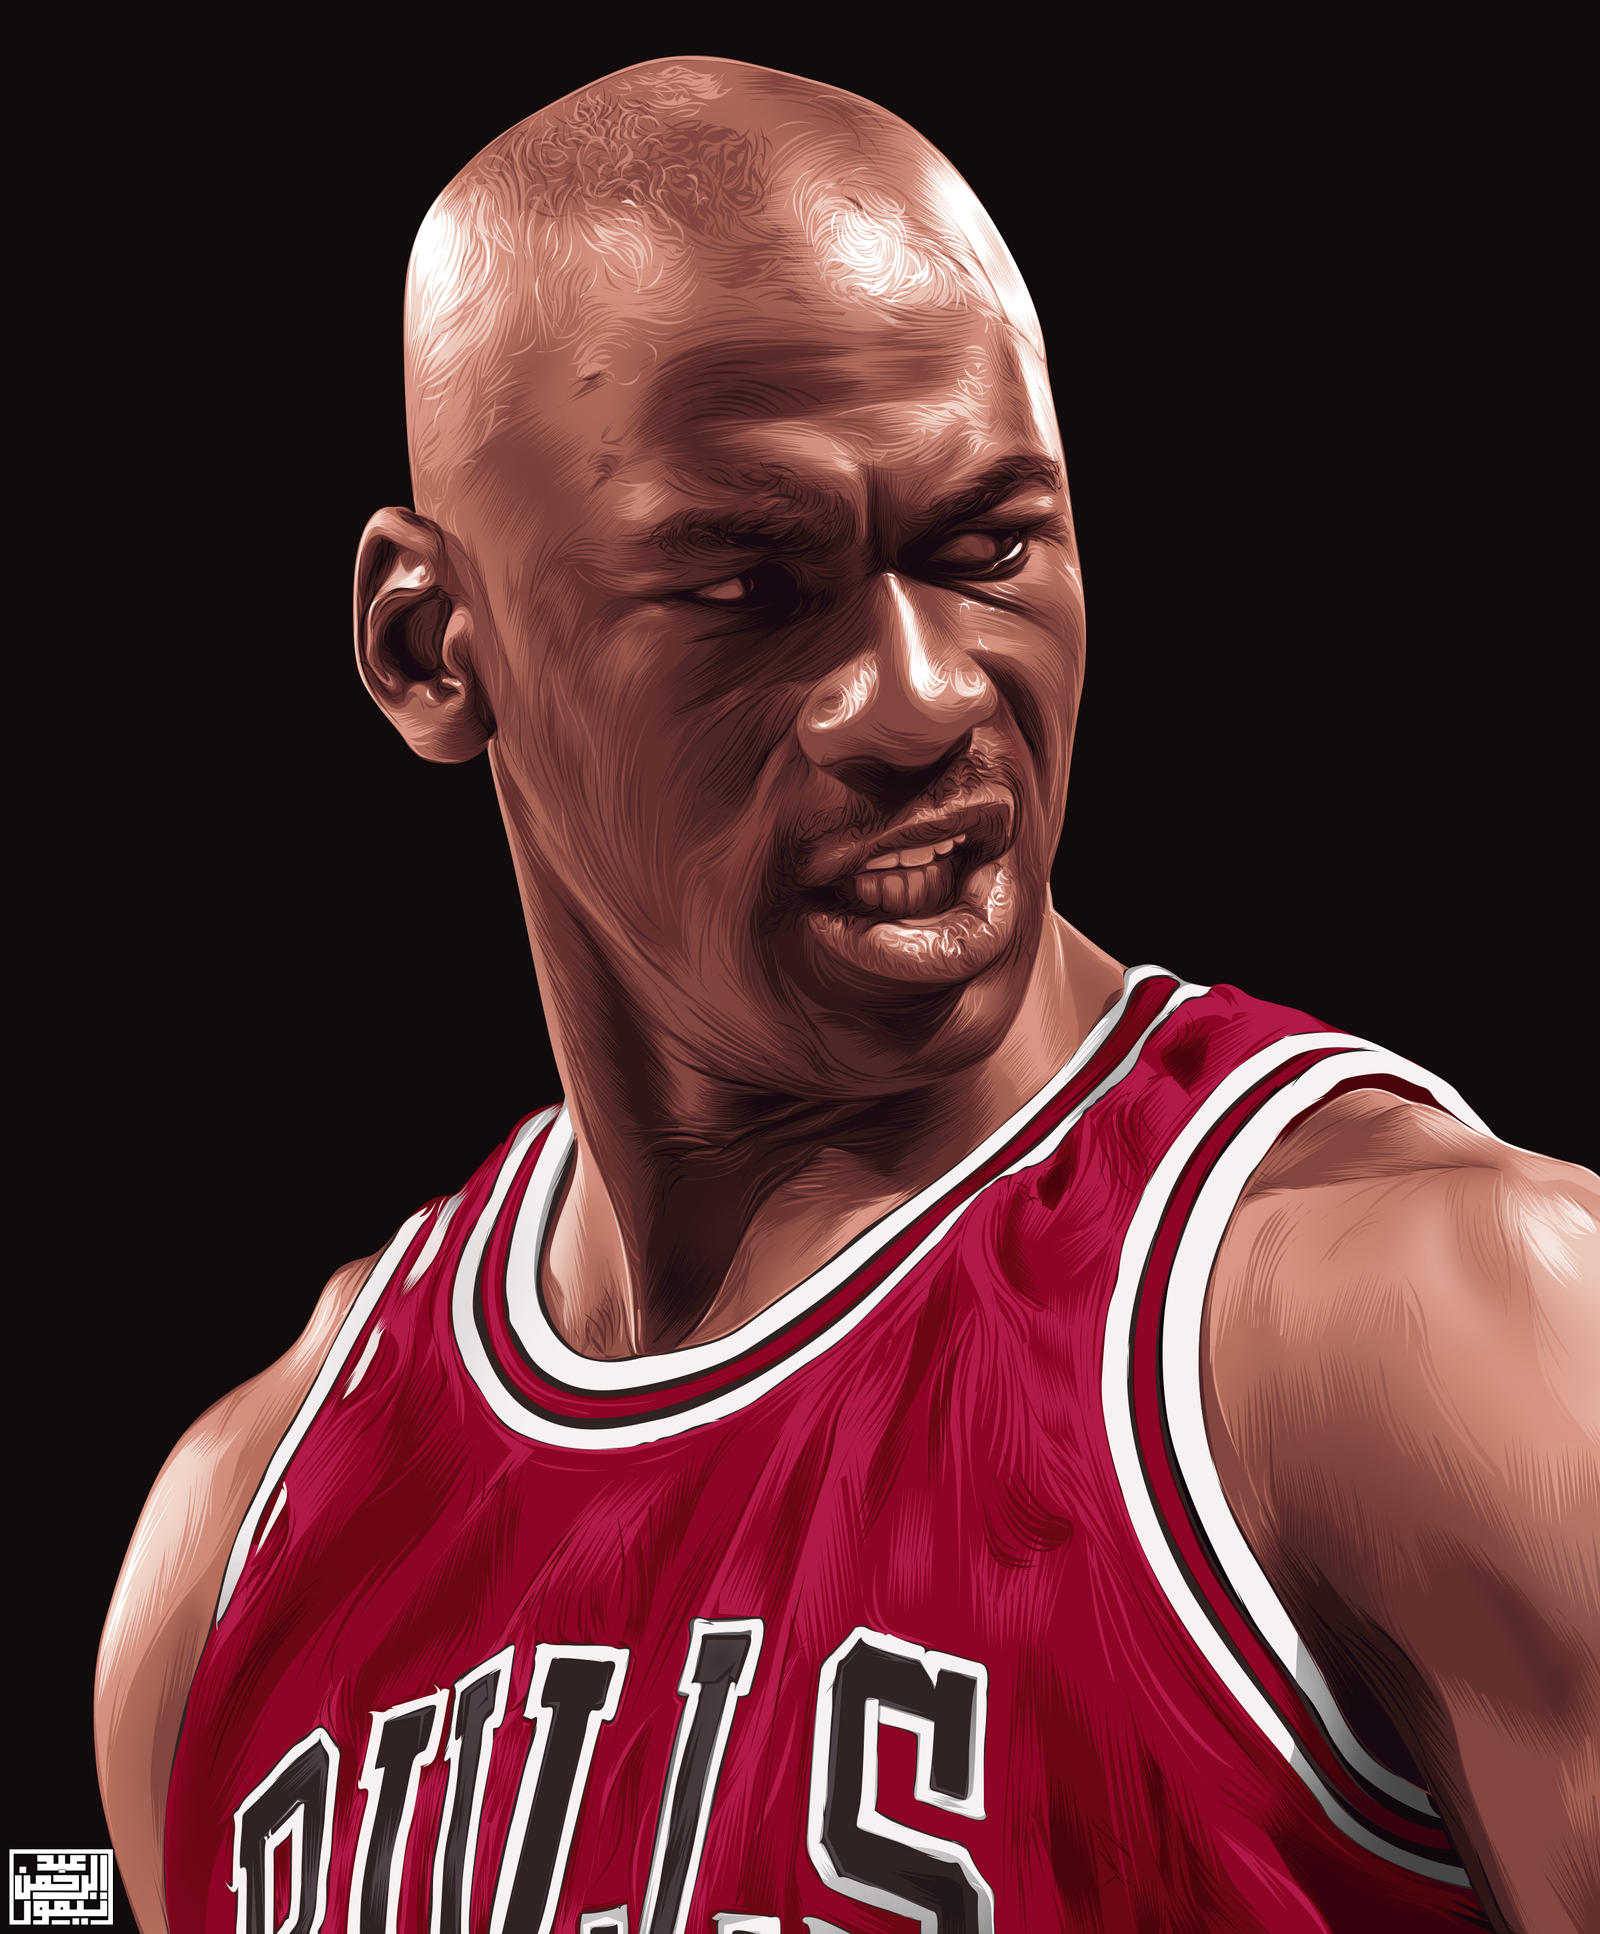 Michael Jordan - Realism Painting by ataymour on DeviantArt